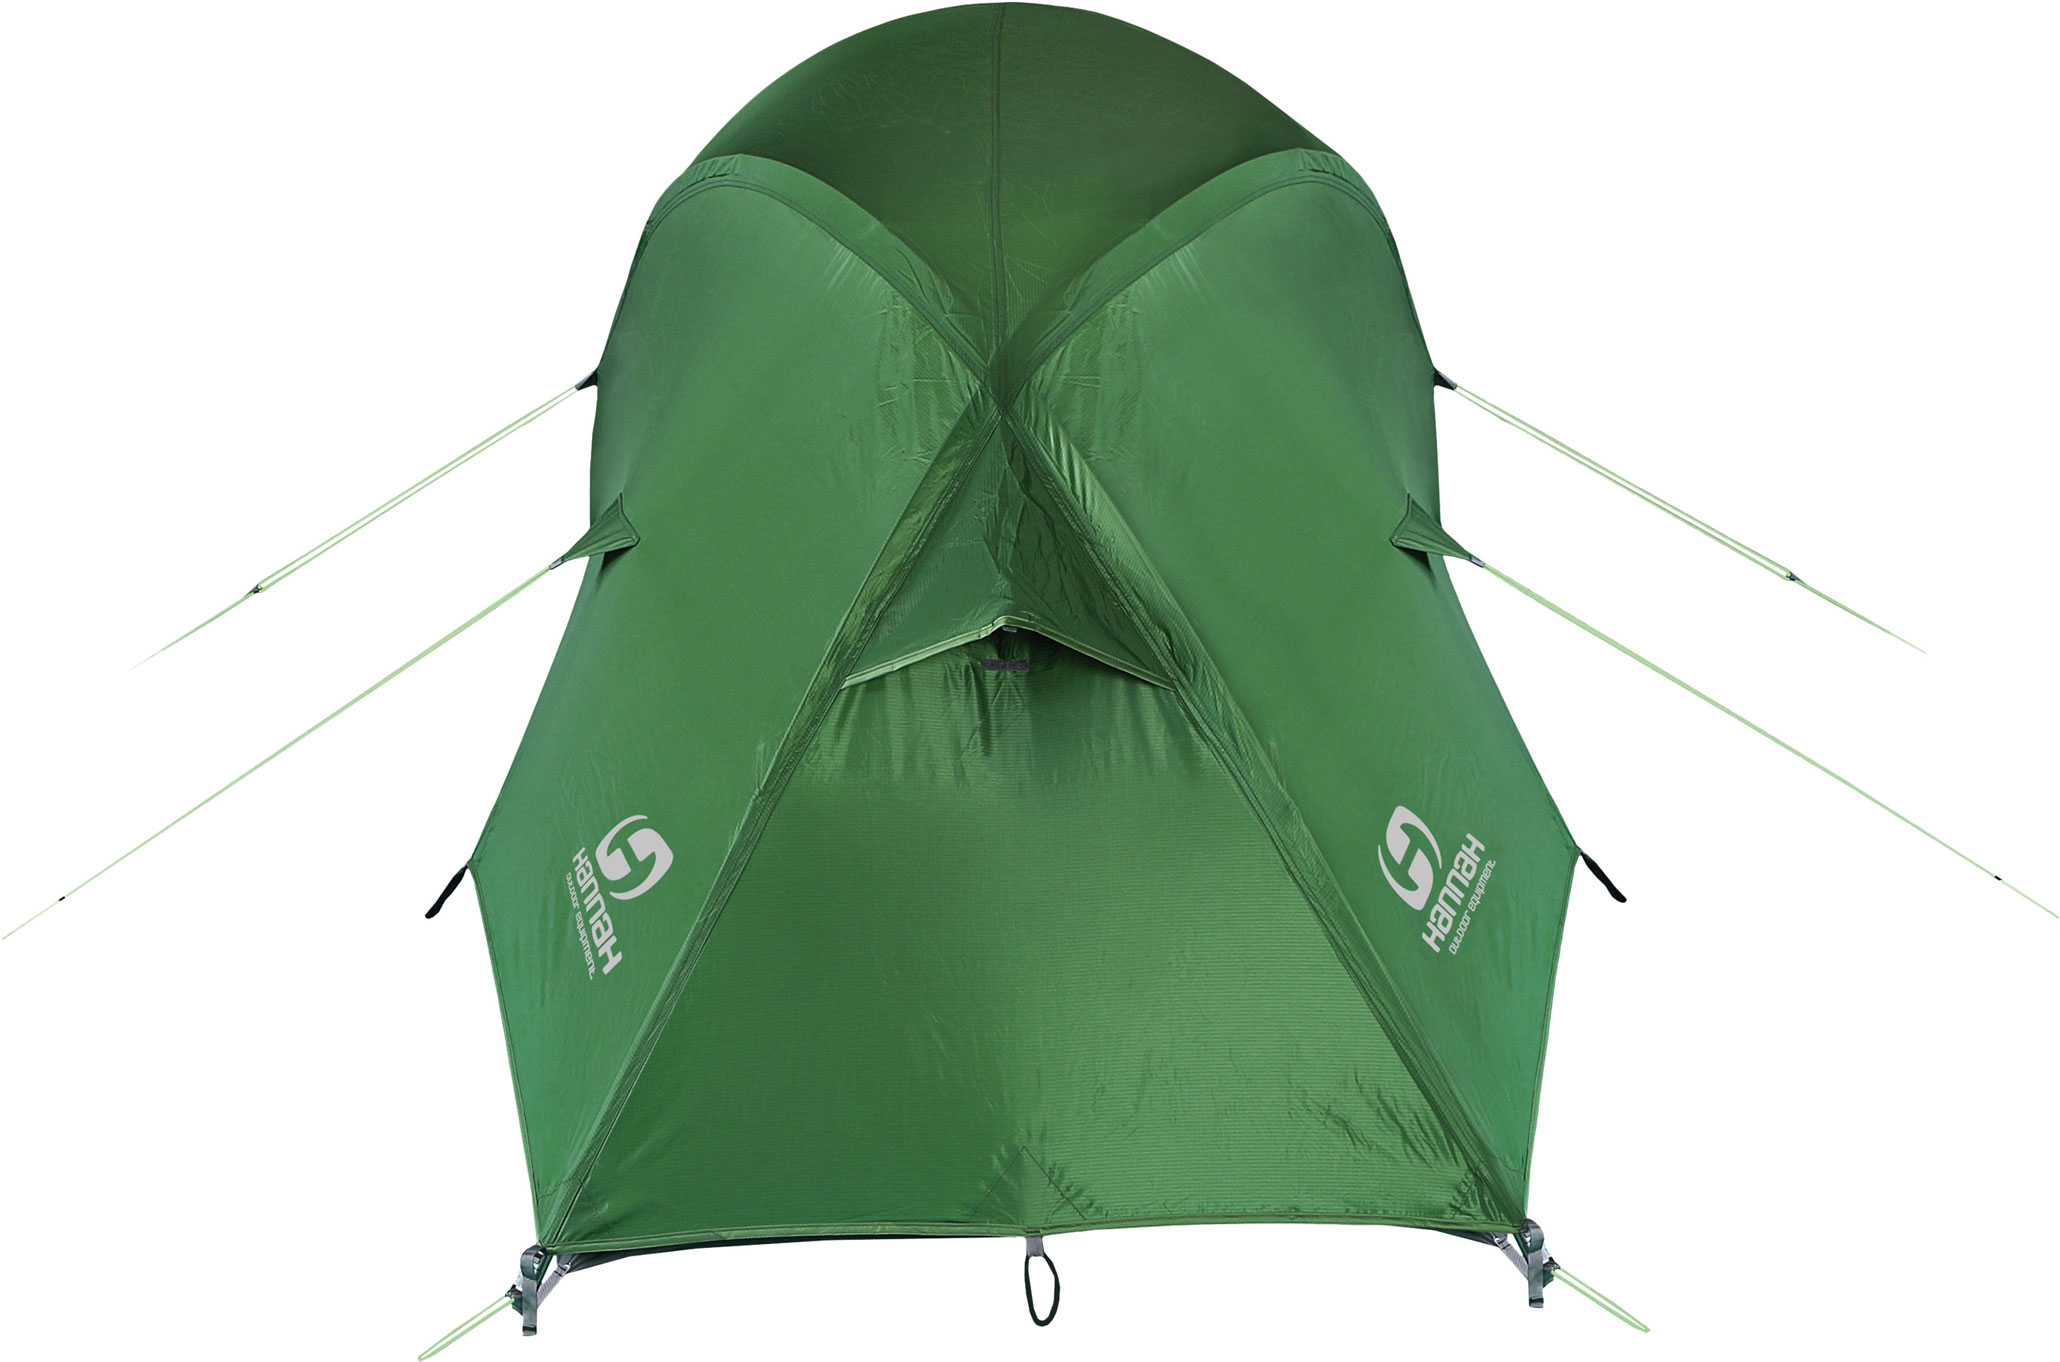 Lightweight outdoor tent